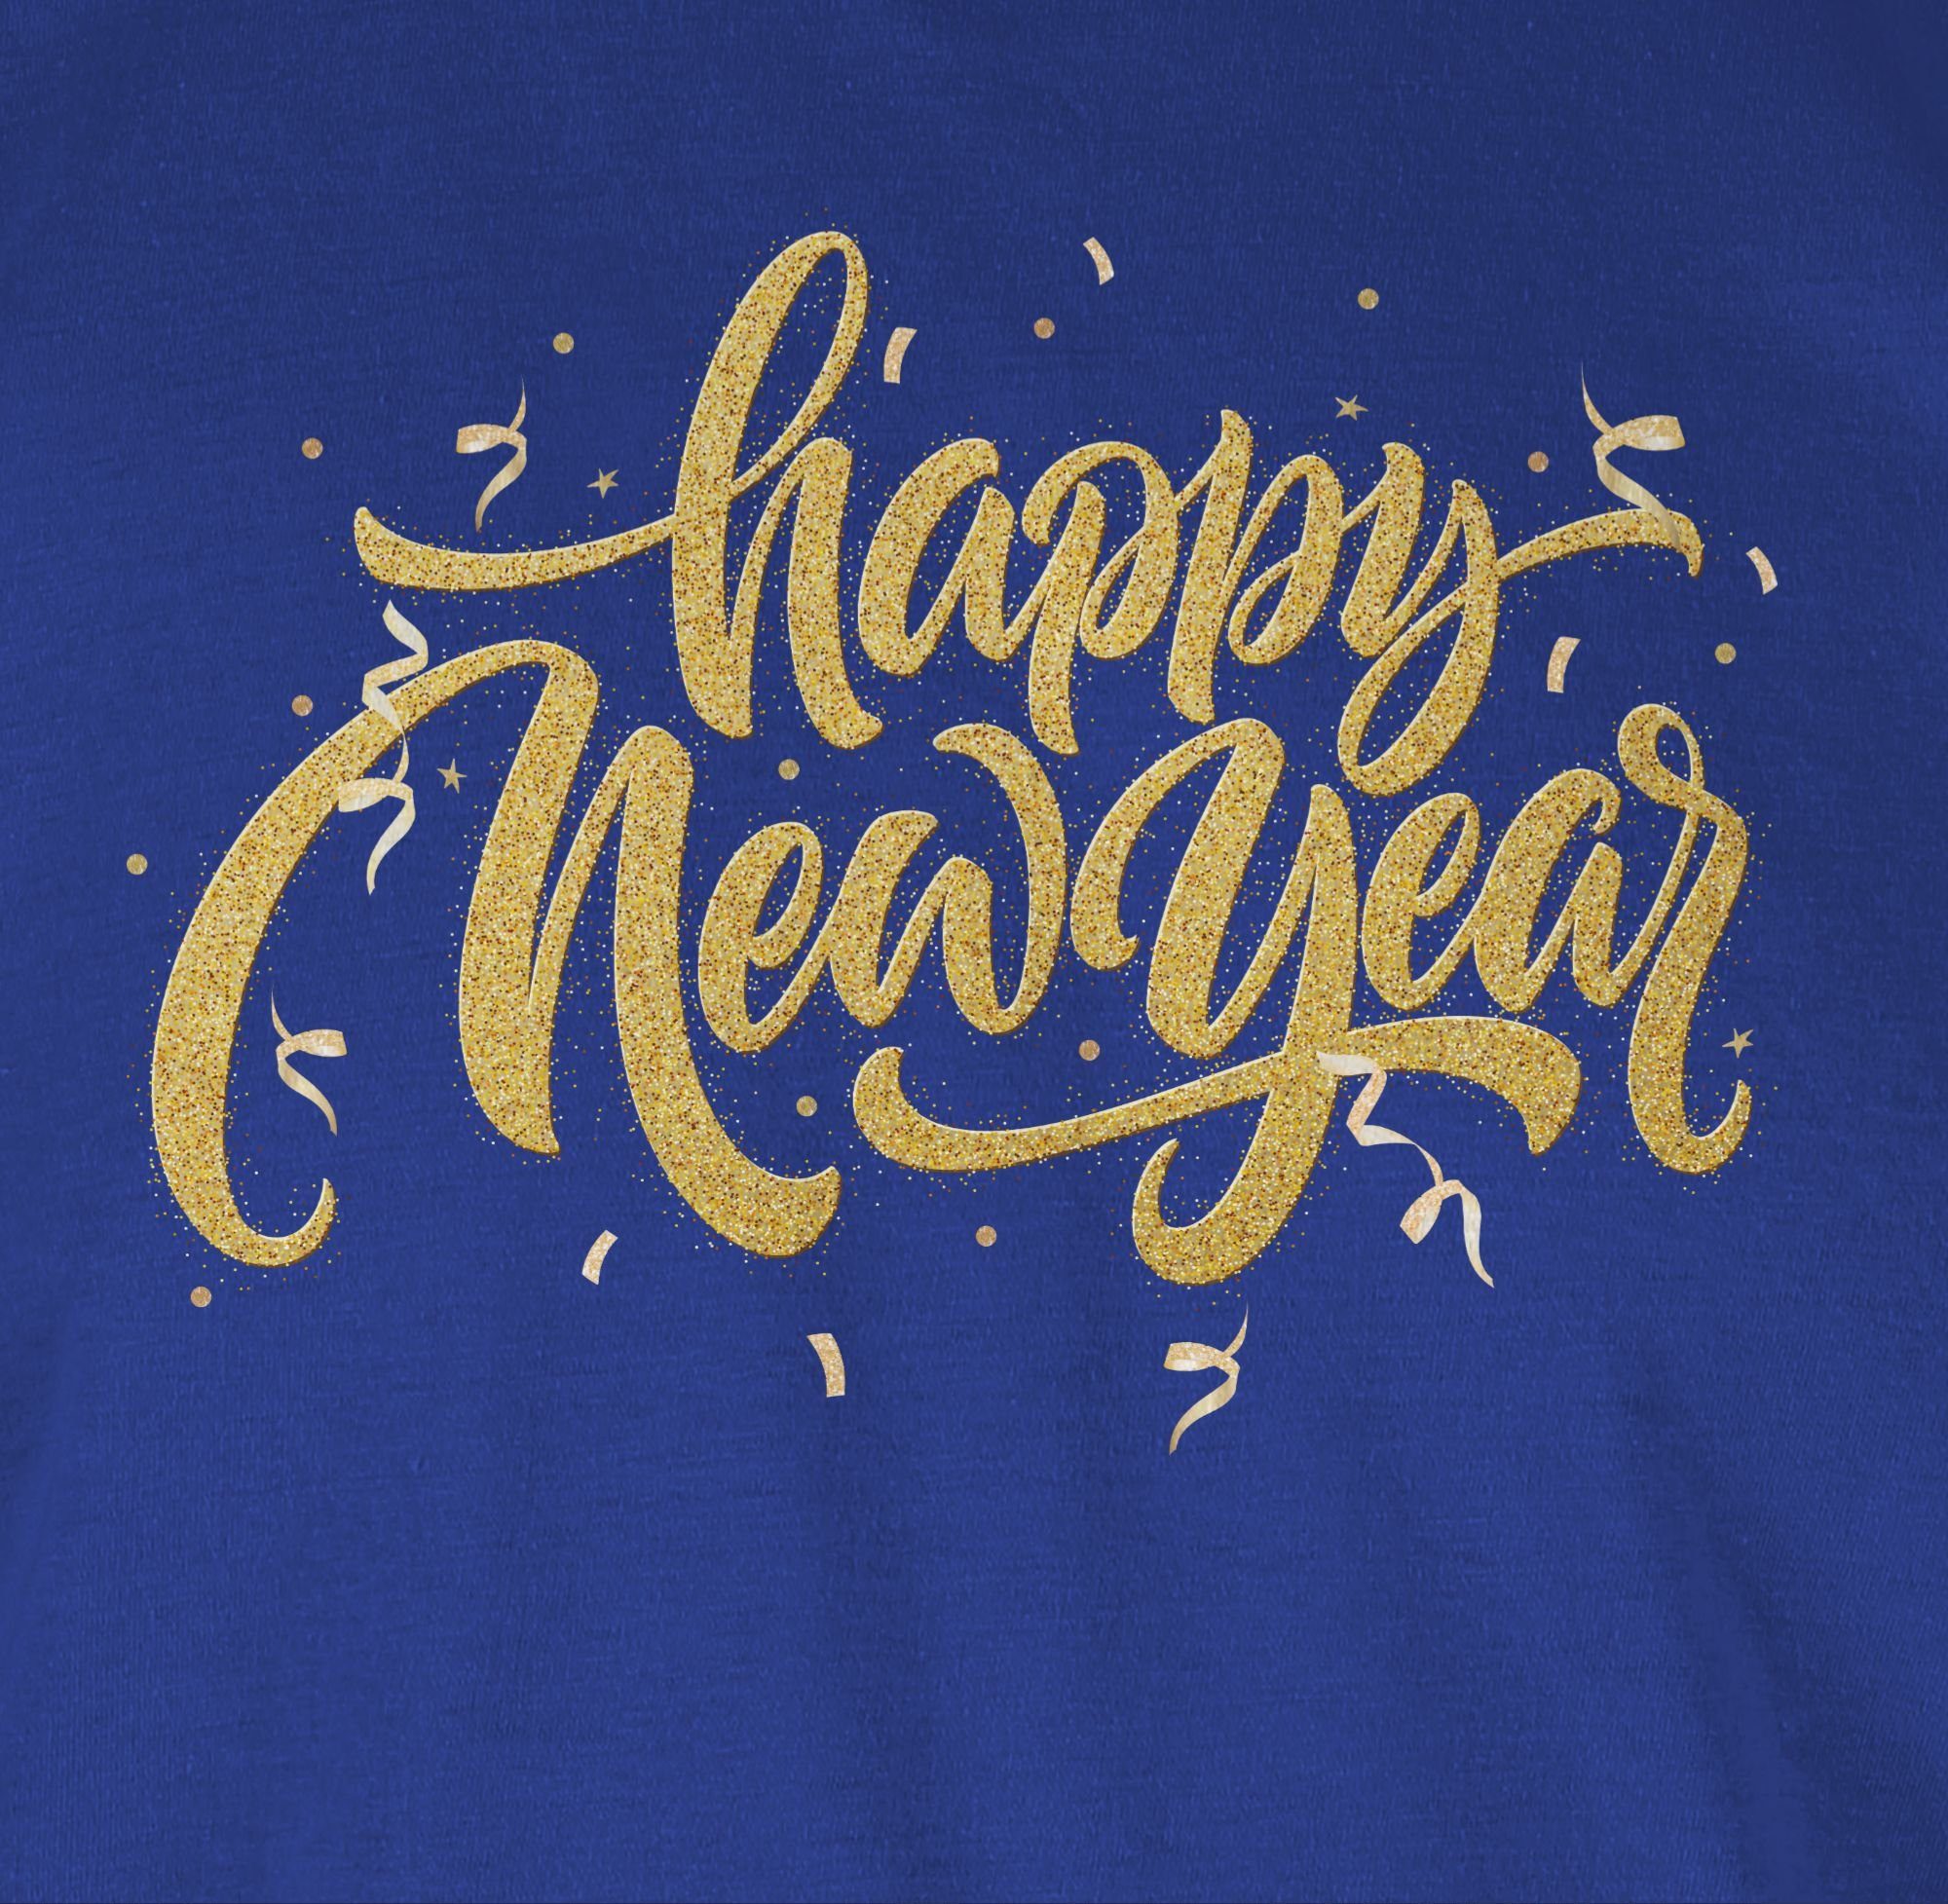 02 Shirtracer New Year Silvester Royalblau Erwachsene T-Shirt Happy